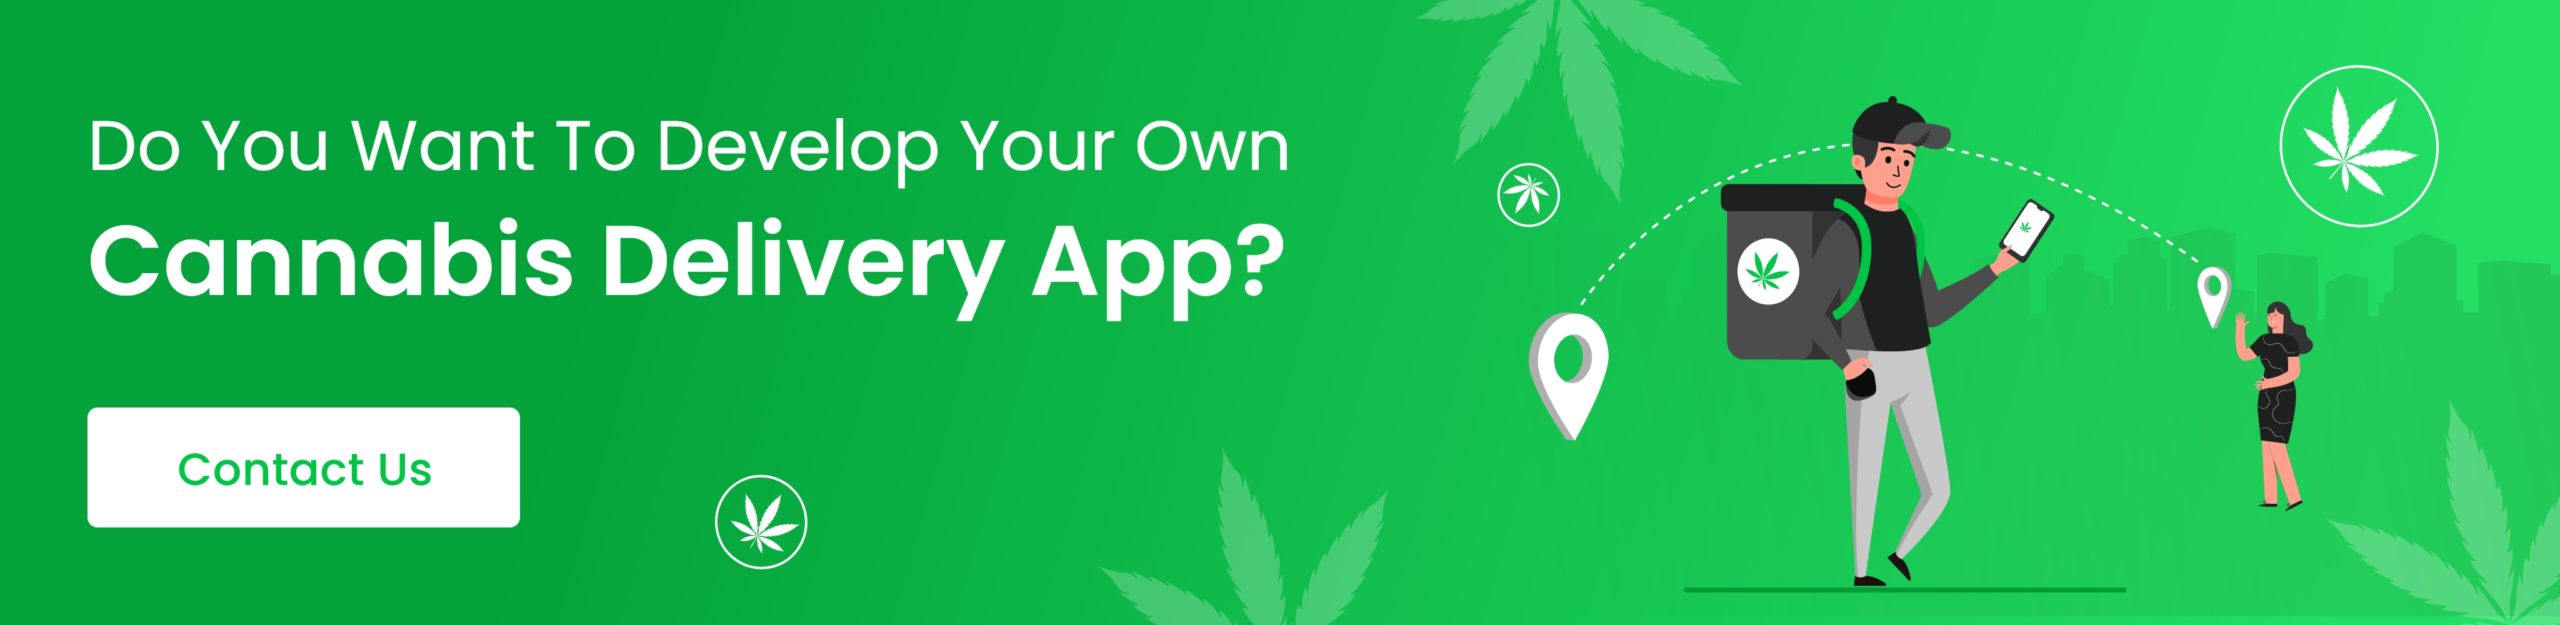 cannabis delivery app